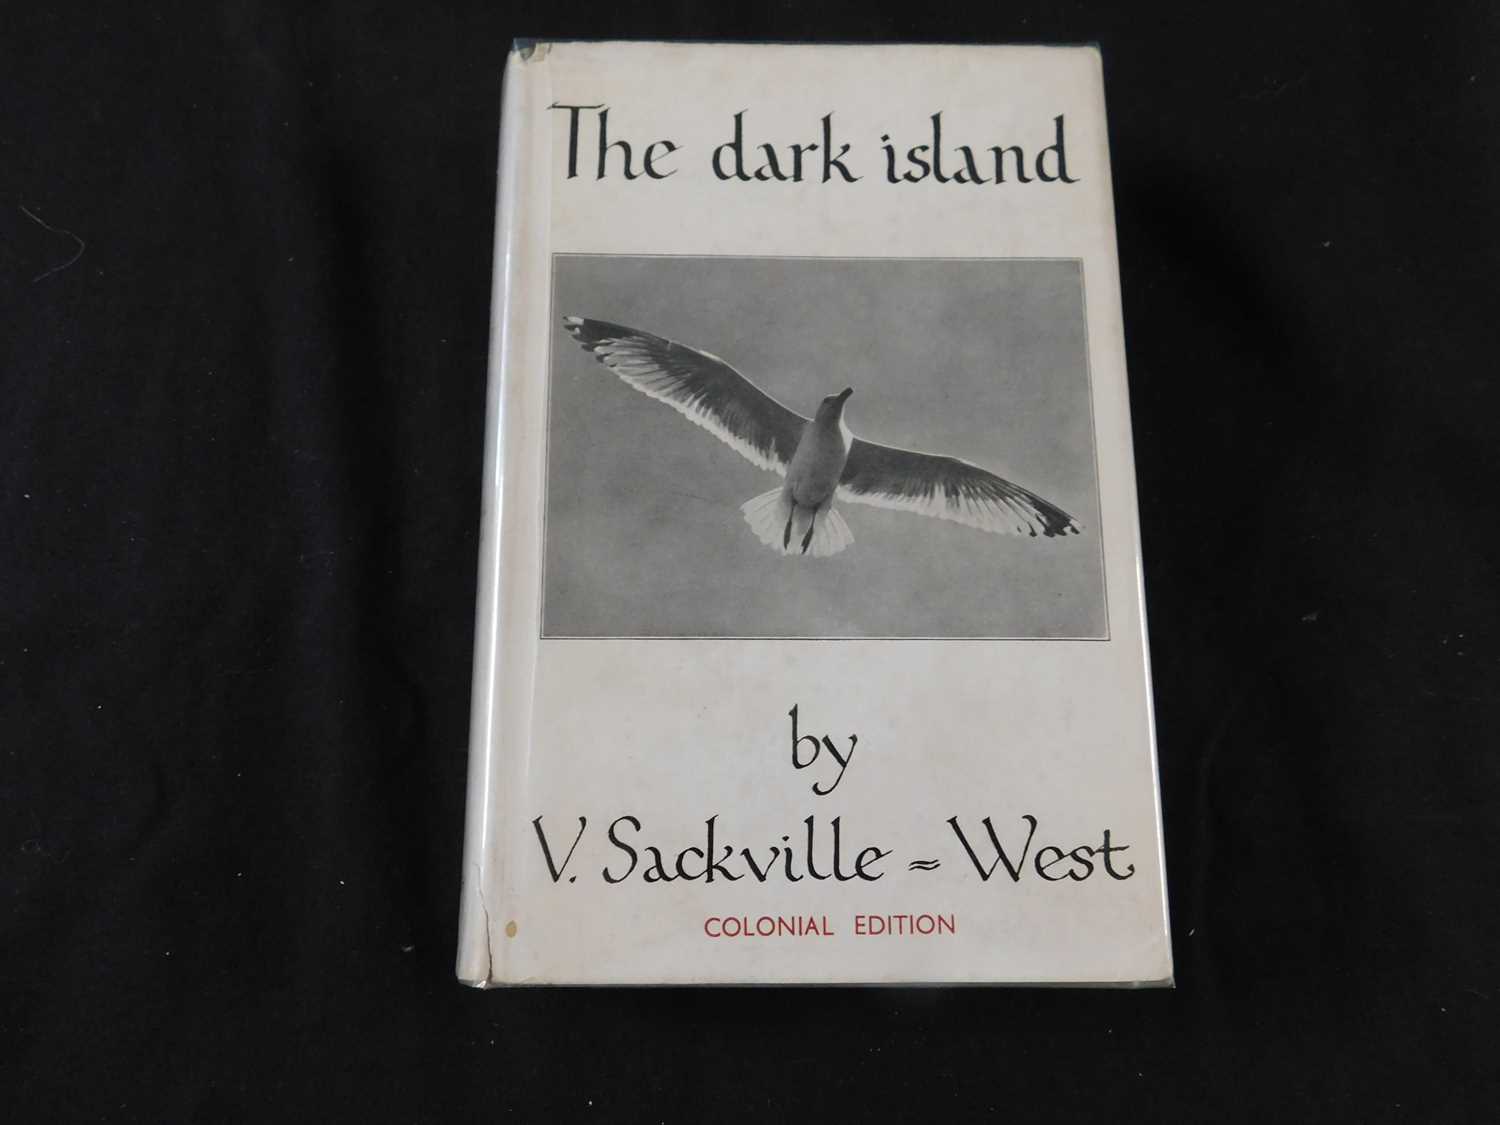 VITA SACKVILLE-WEST: THE DARK ISLAND, London, The Hogarth Press, 1934, 1st edition, bookplate on